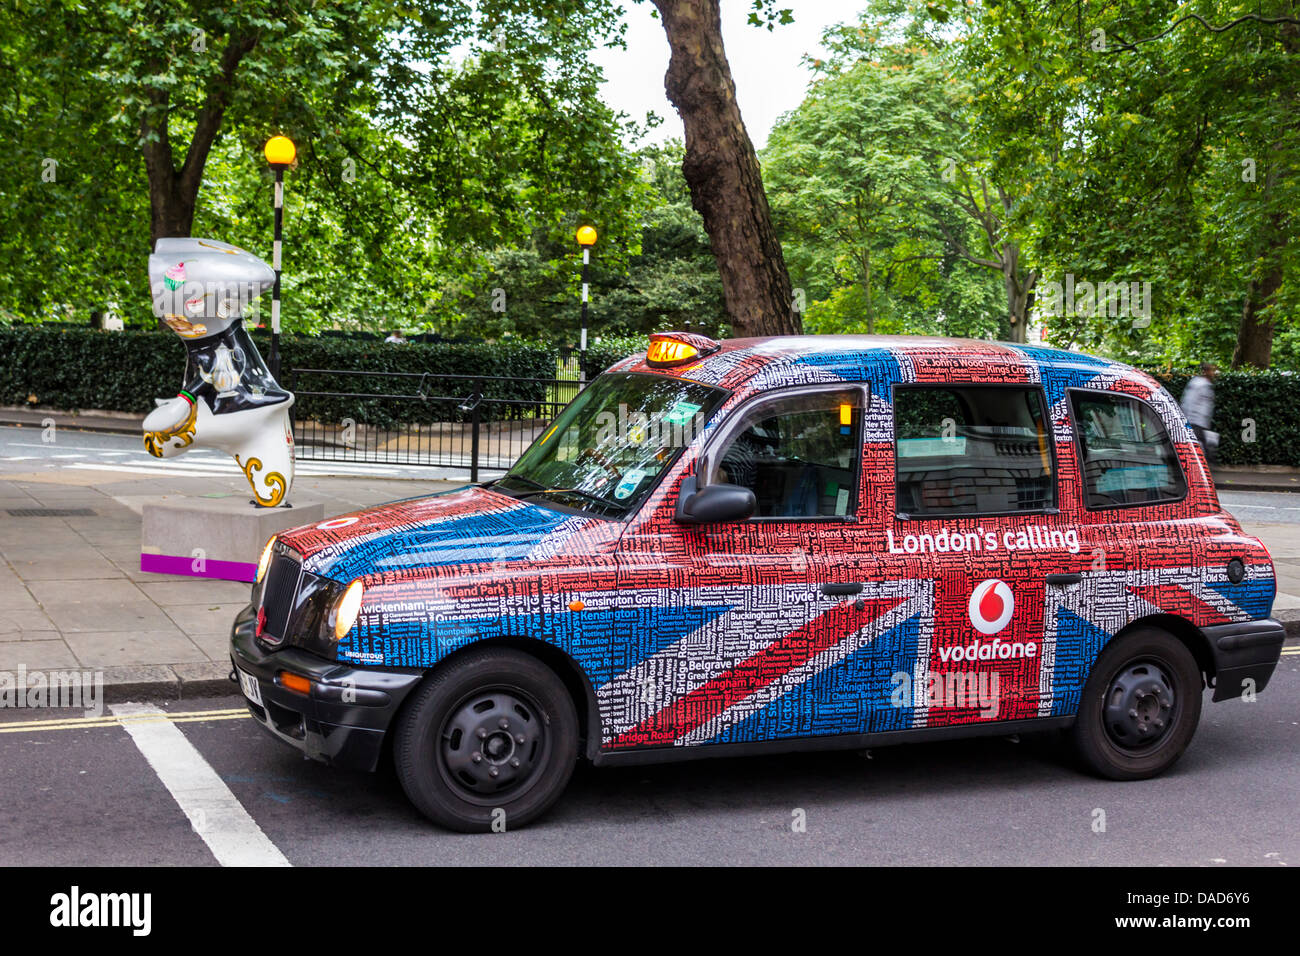 London Taxi mit Vodafone Werbung Stockfoto